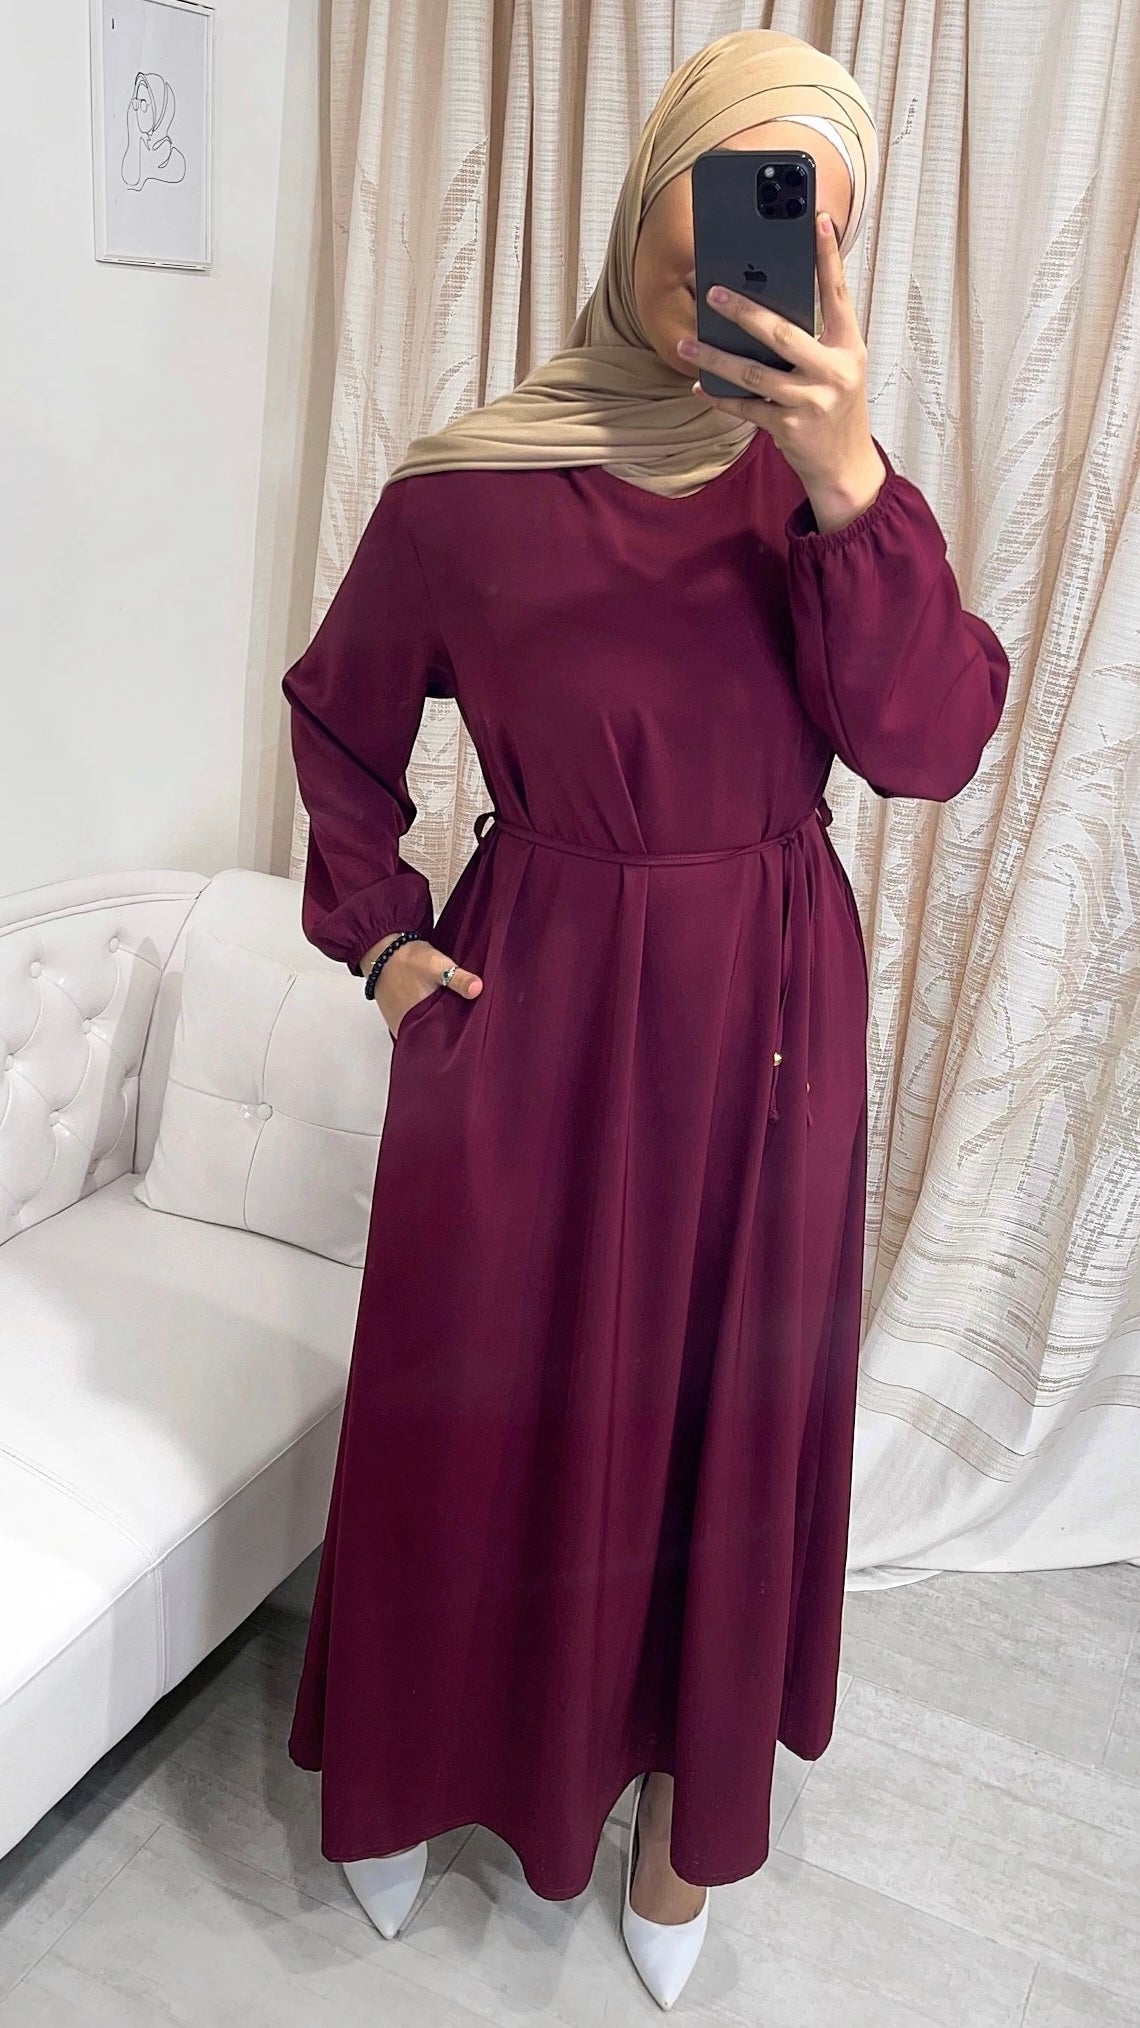 Vestito, abaya, semplice, colore unico, cintutino in vita, polsi arricciati, donna islamica, modest dress , Hijab Paradise, bordeaux, hijab caramello